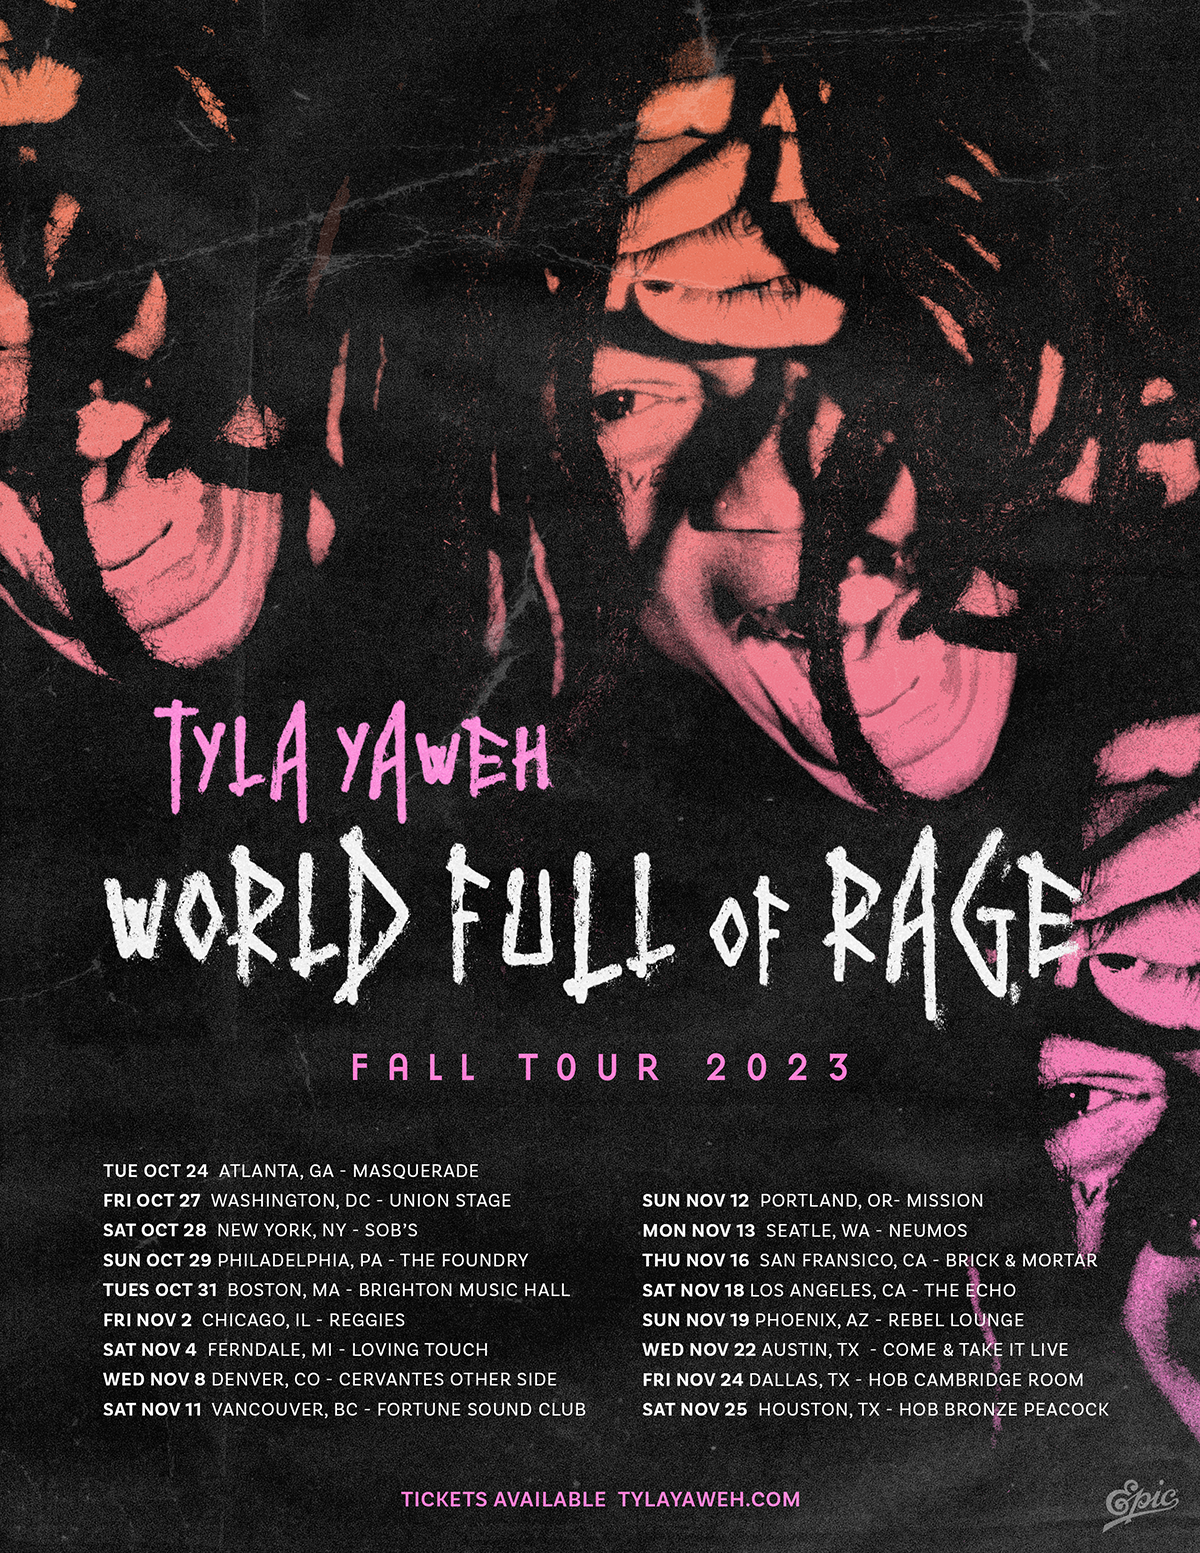 World Full of Rage Tour